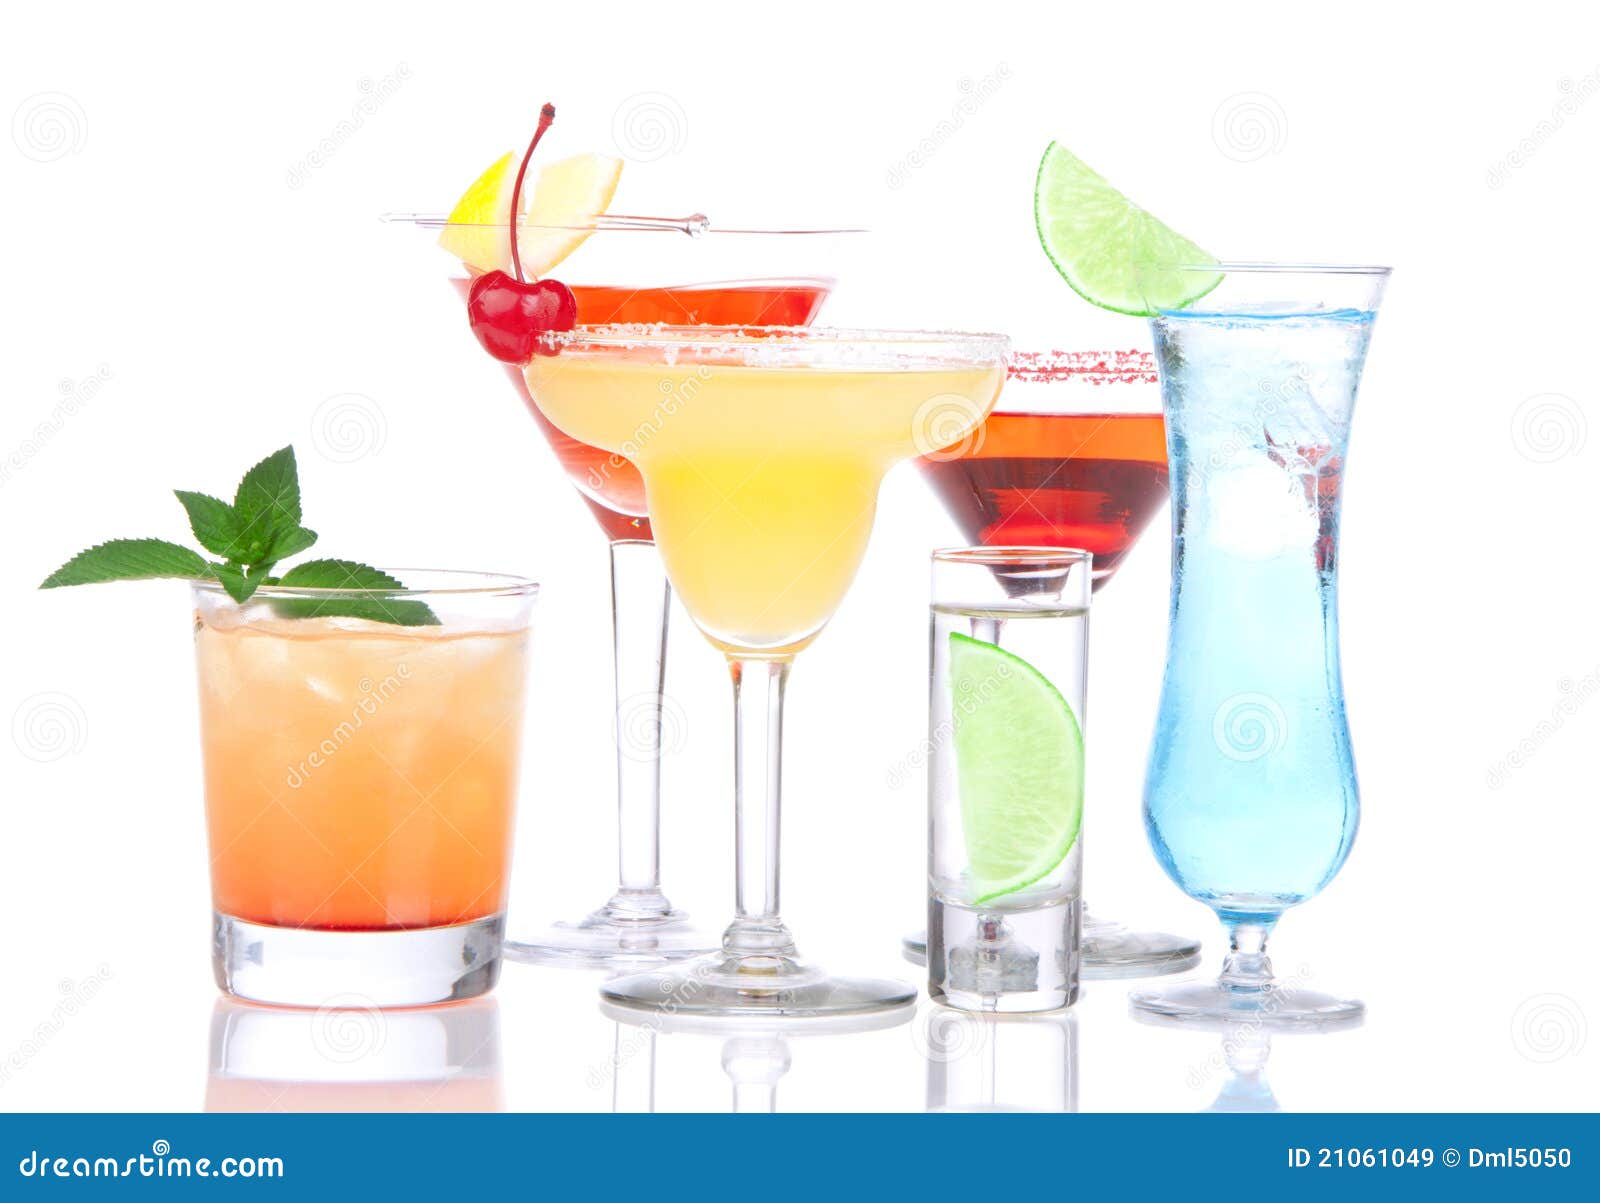 cocktails alcohol drinks spirits